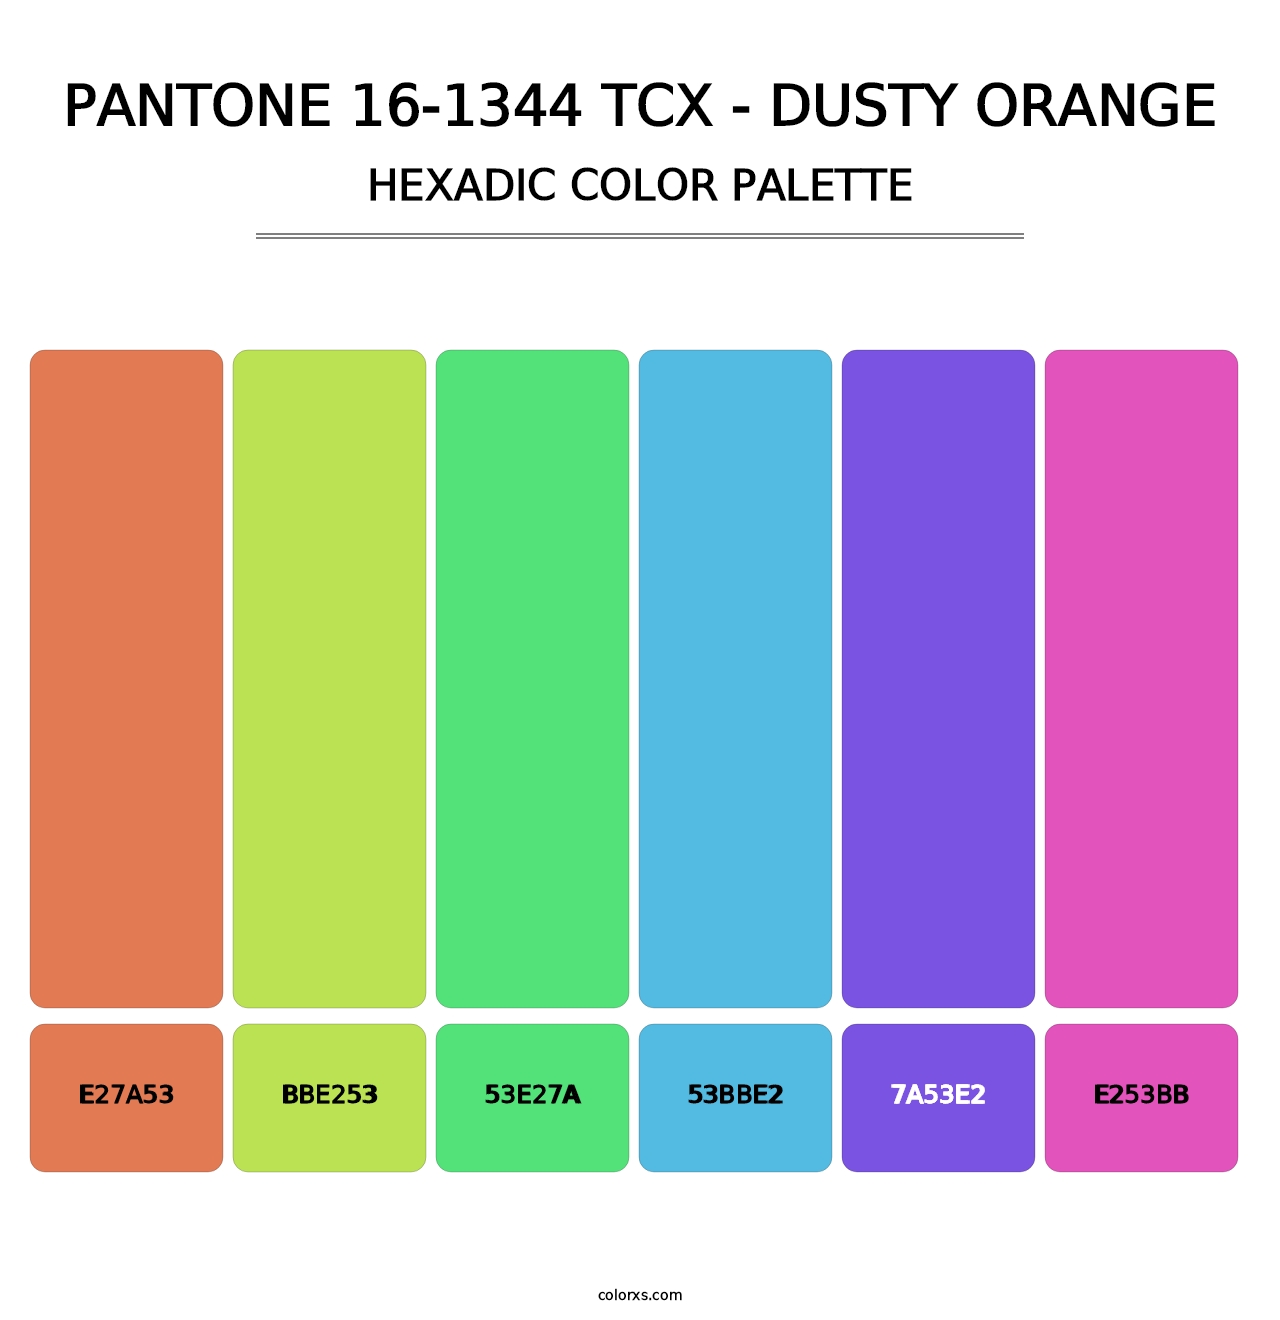 PANTONE 16-1344 TCX - Dusty Orange - Hexadic Color Palette